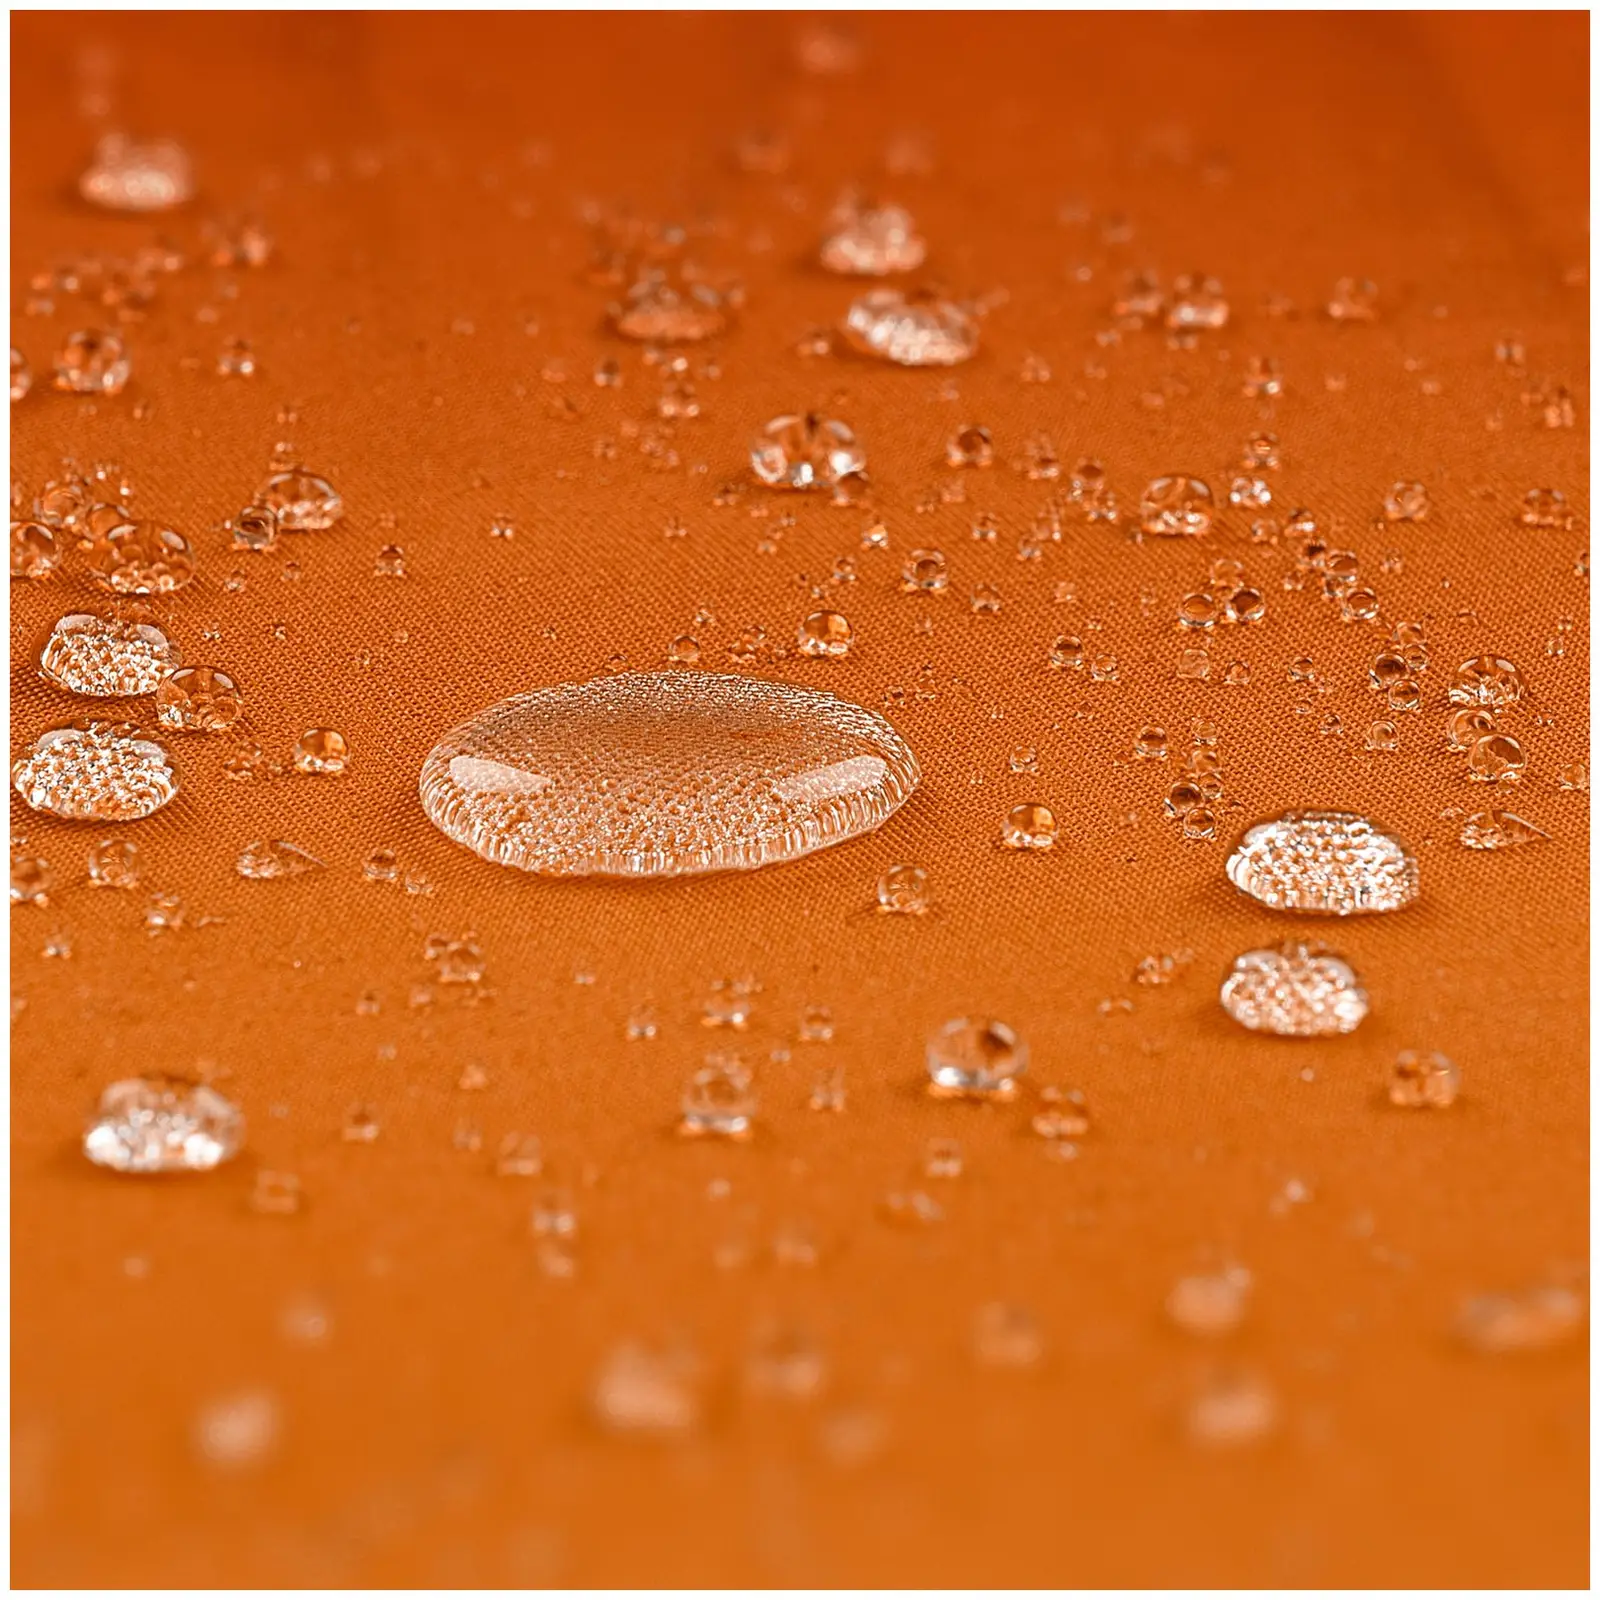 Occasion Grand parasol - Orange - Rectangulaire - 200 x 300 cm - Inclinable